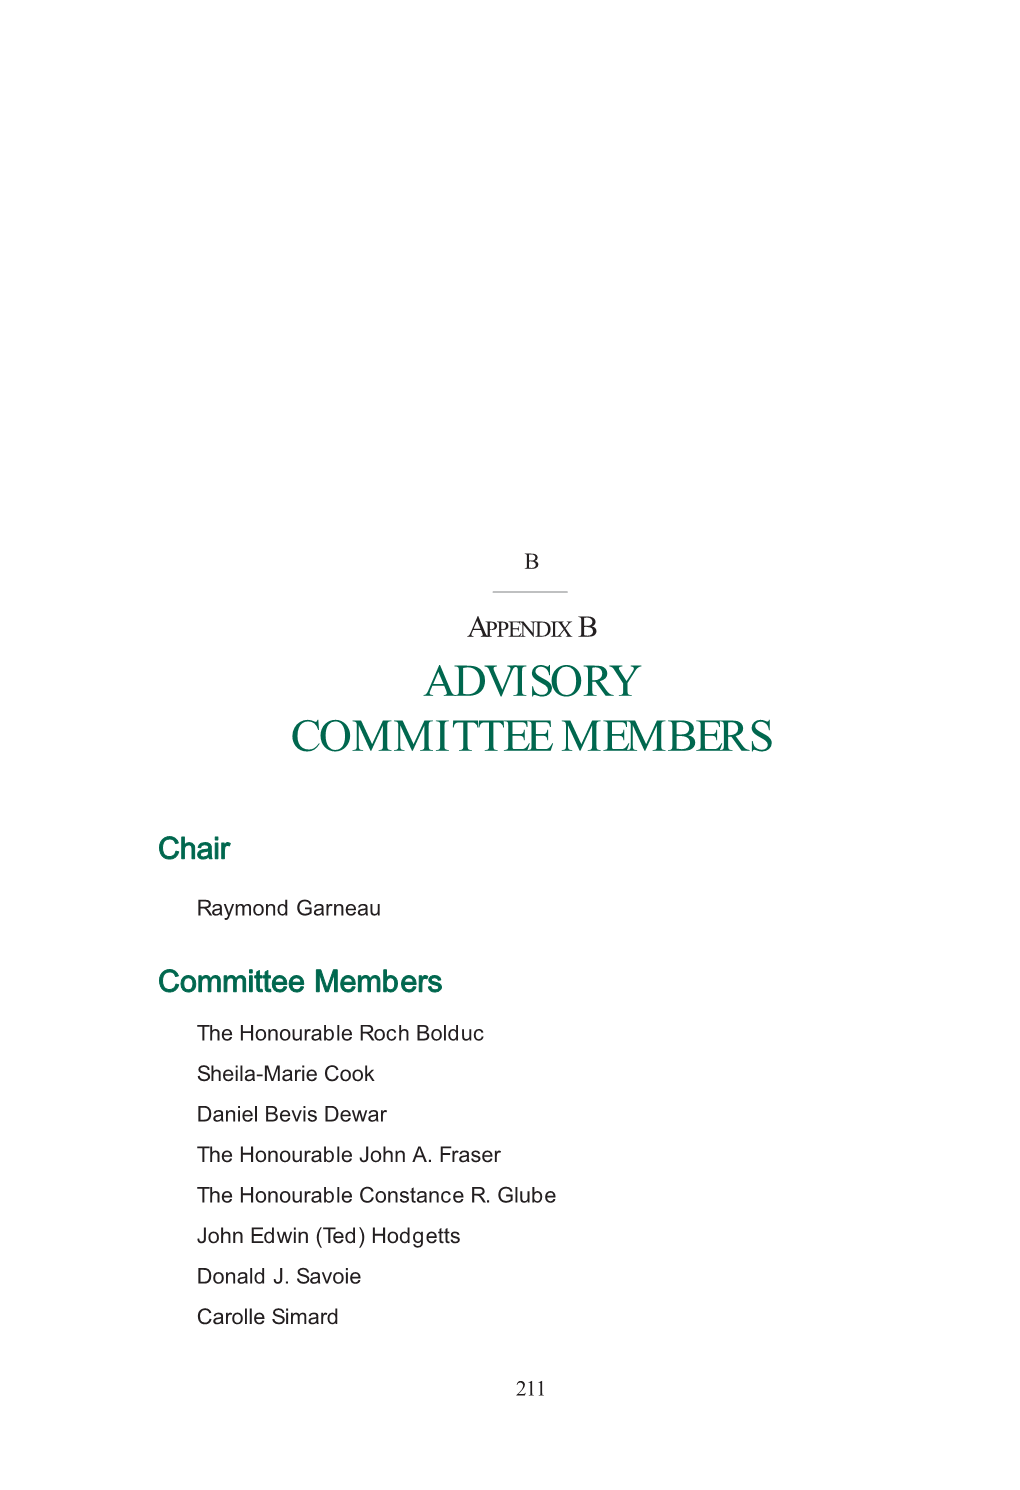 Advisory Committee Members